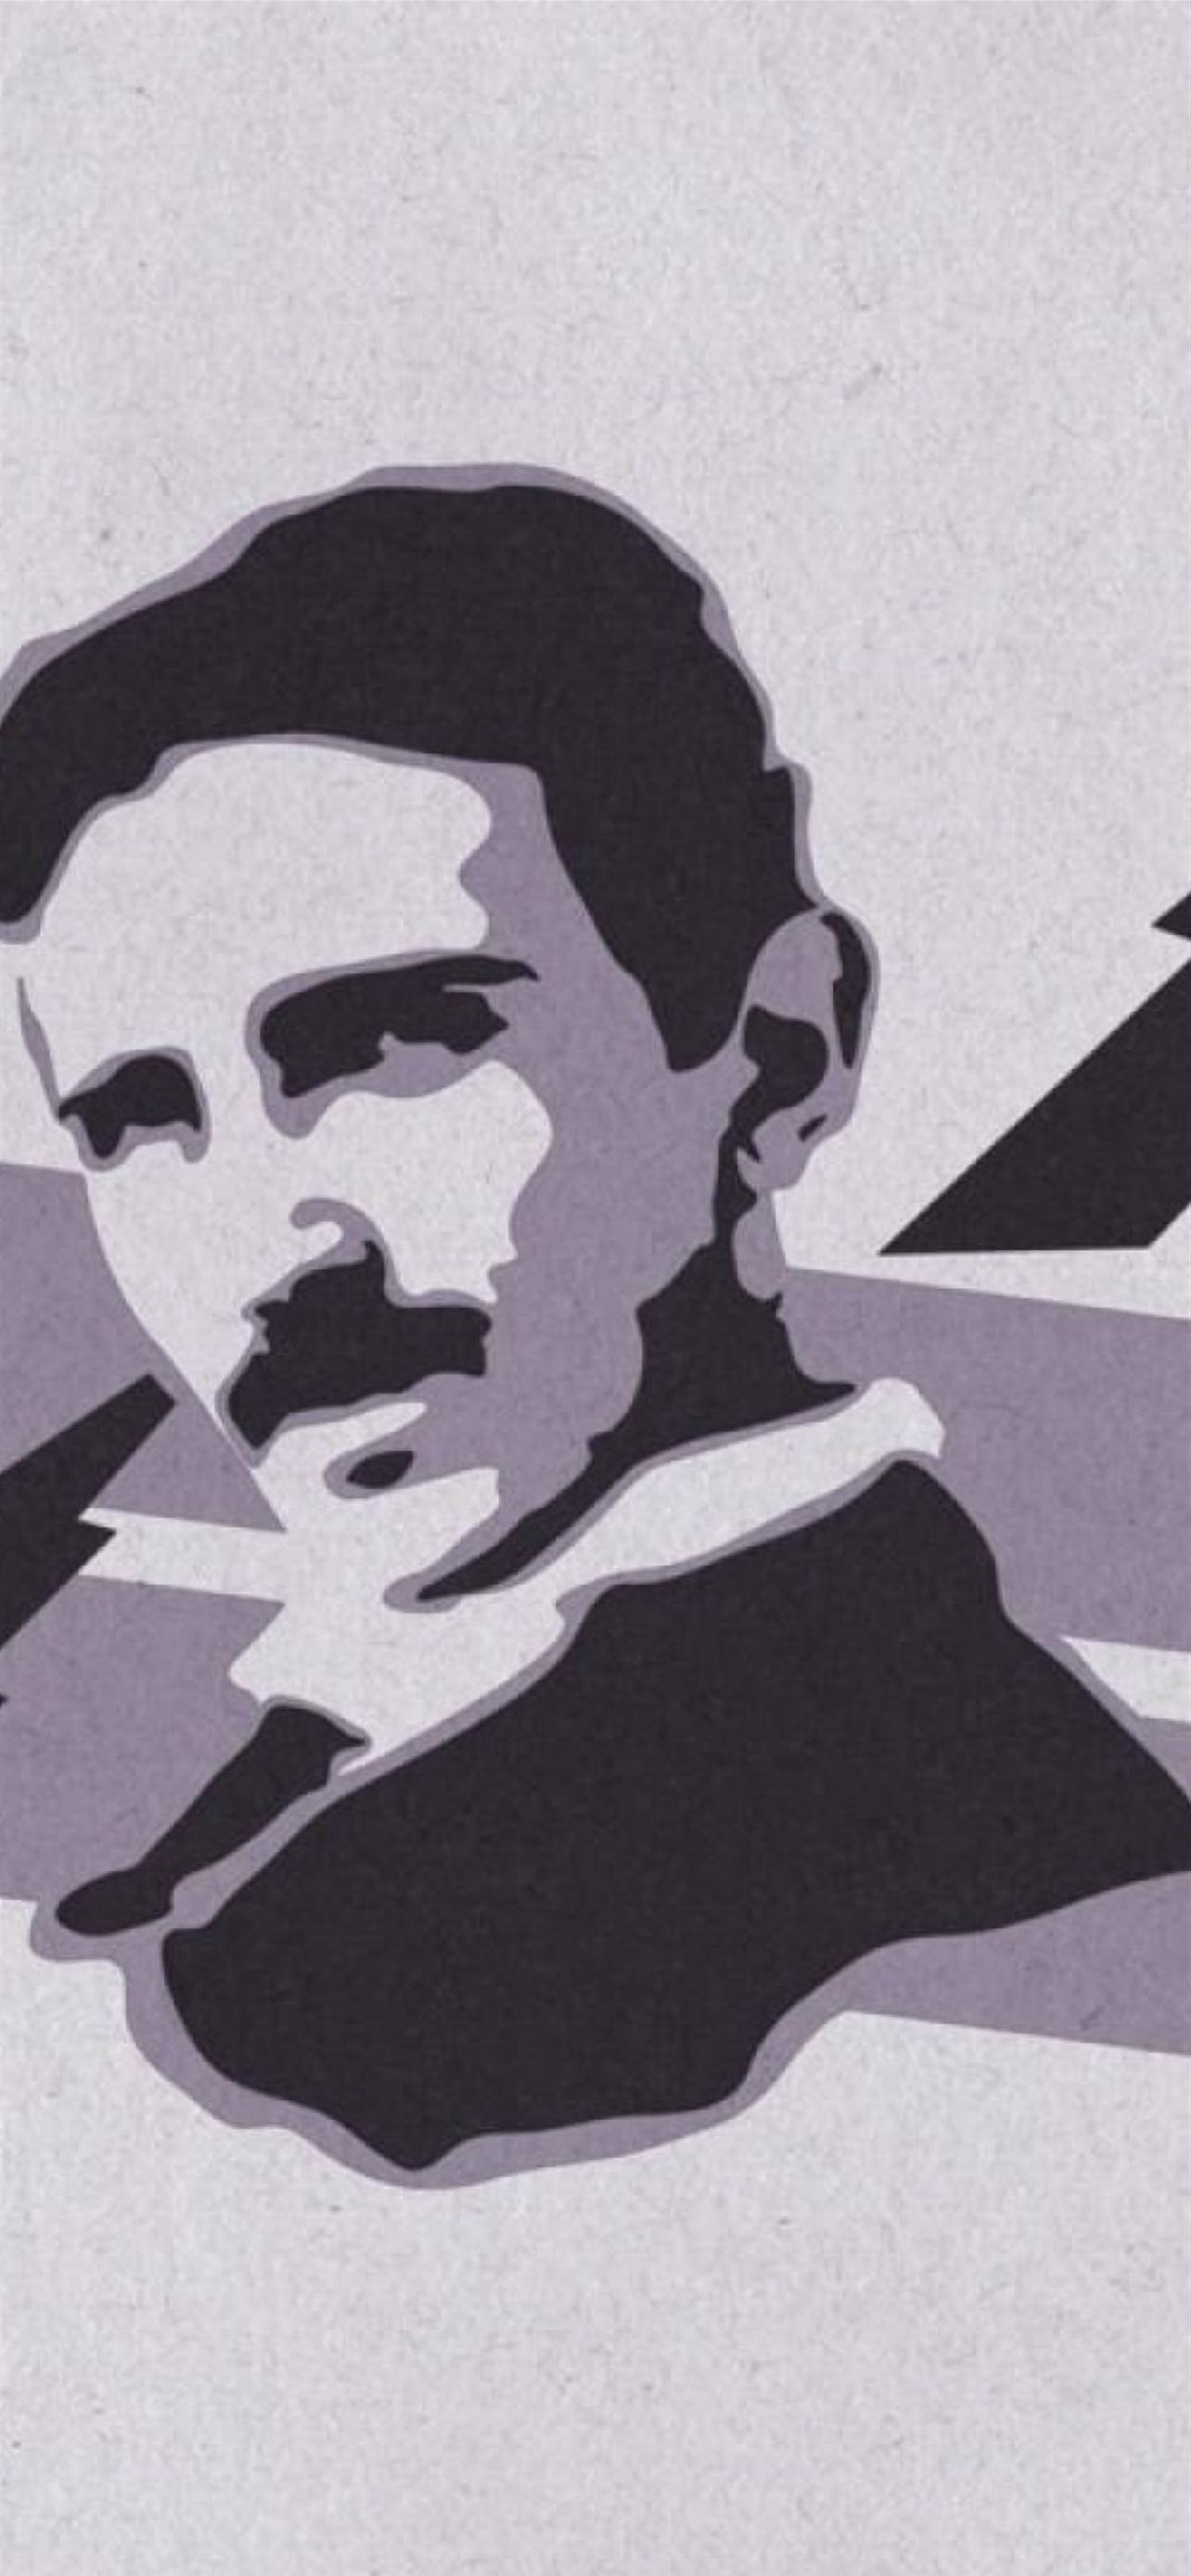 Nikola Tesla for Google Nexus 10 Maiden iPhone Wallpapers Free Download